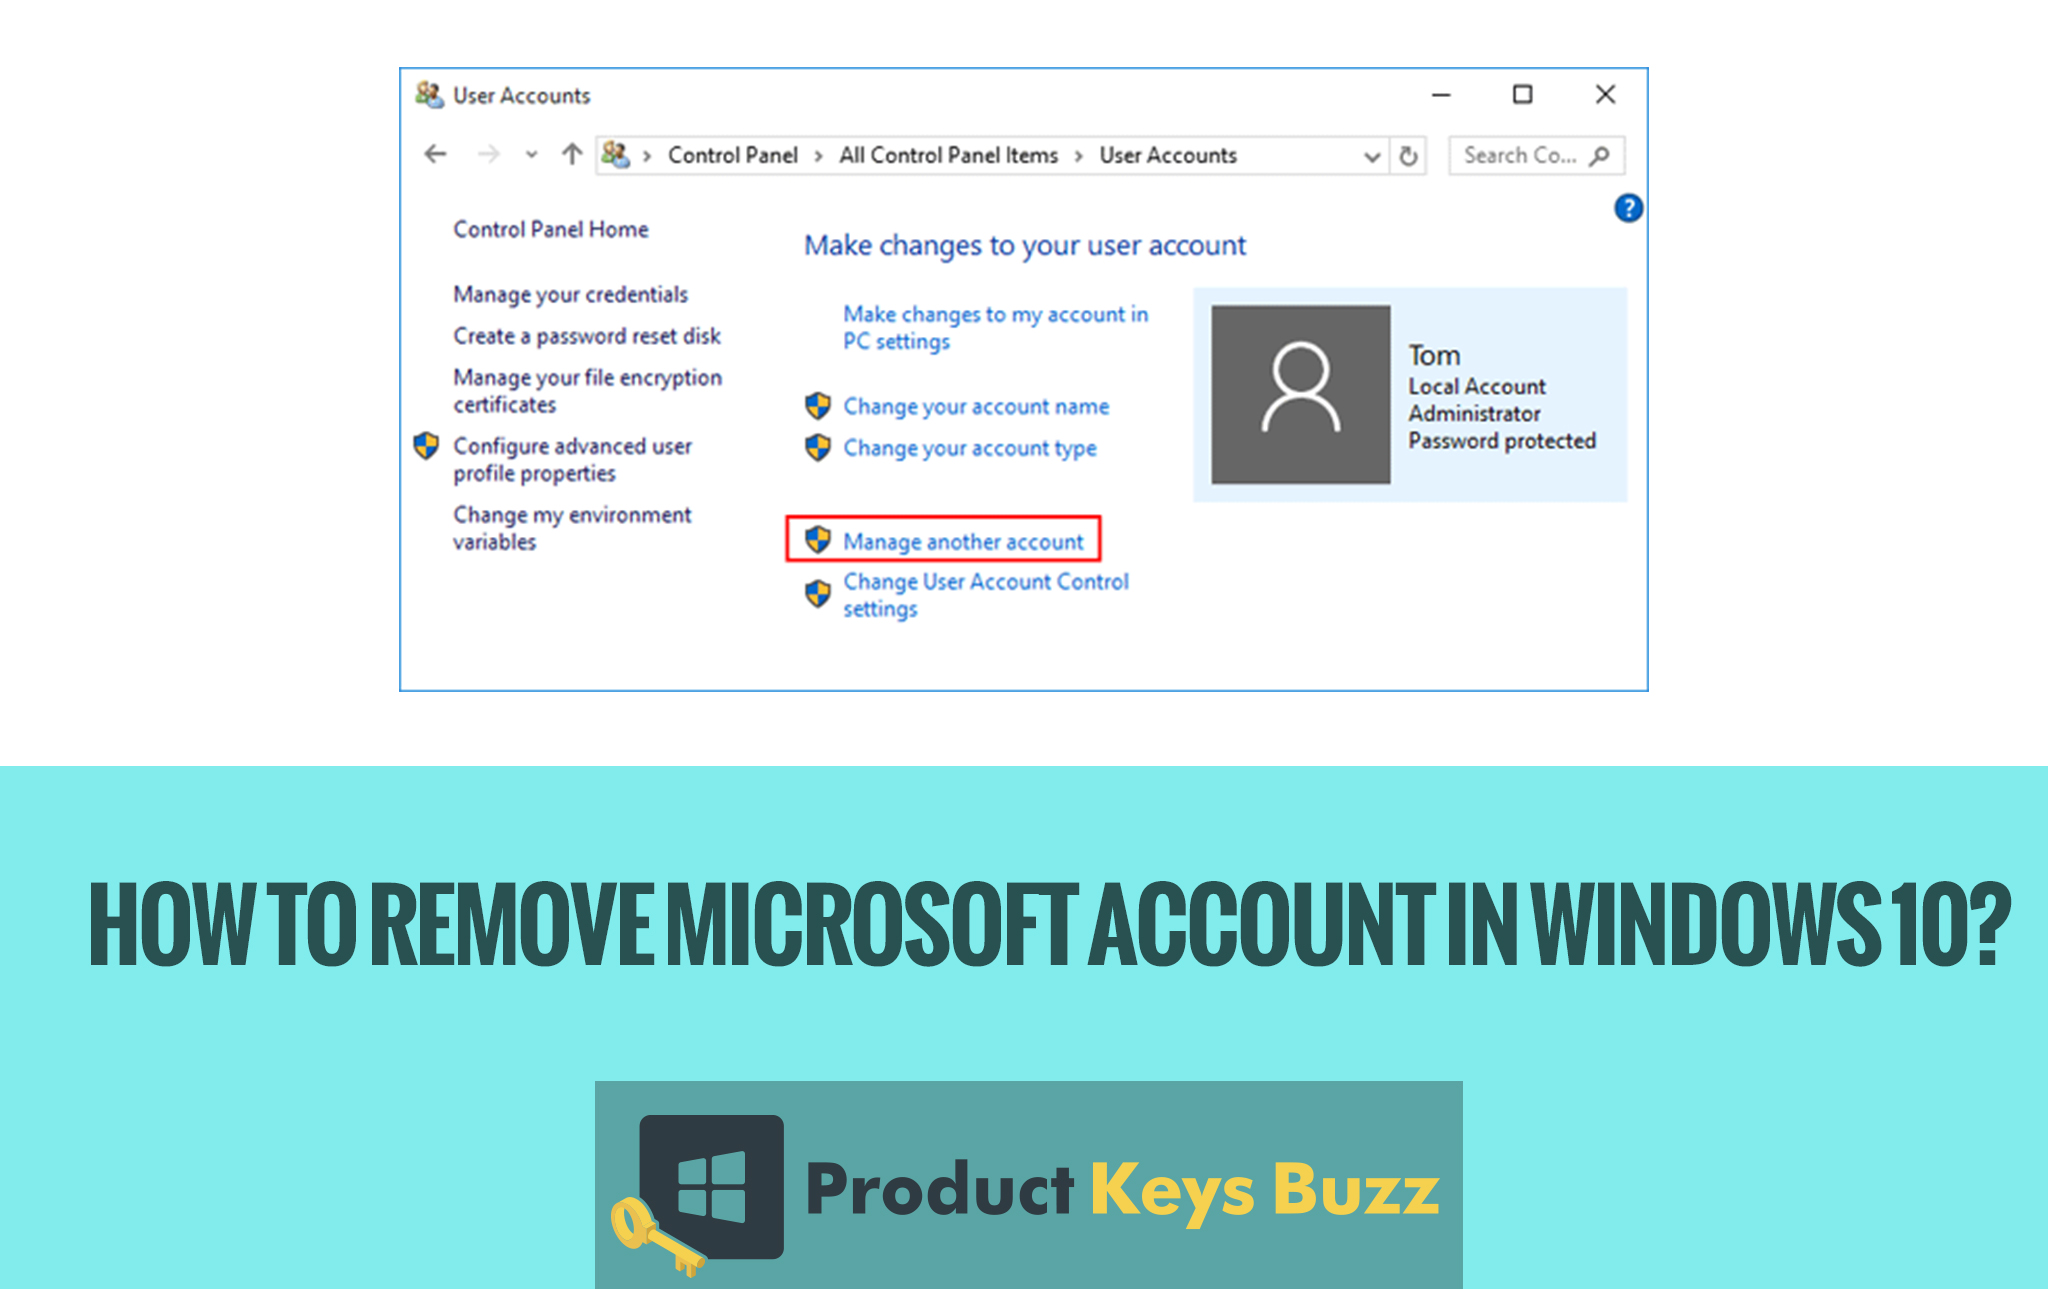 remove microsoft account from windows phone